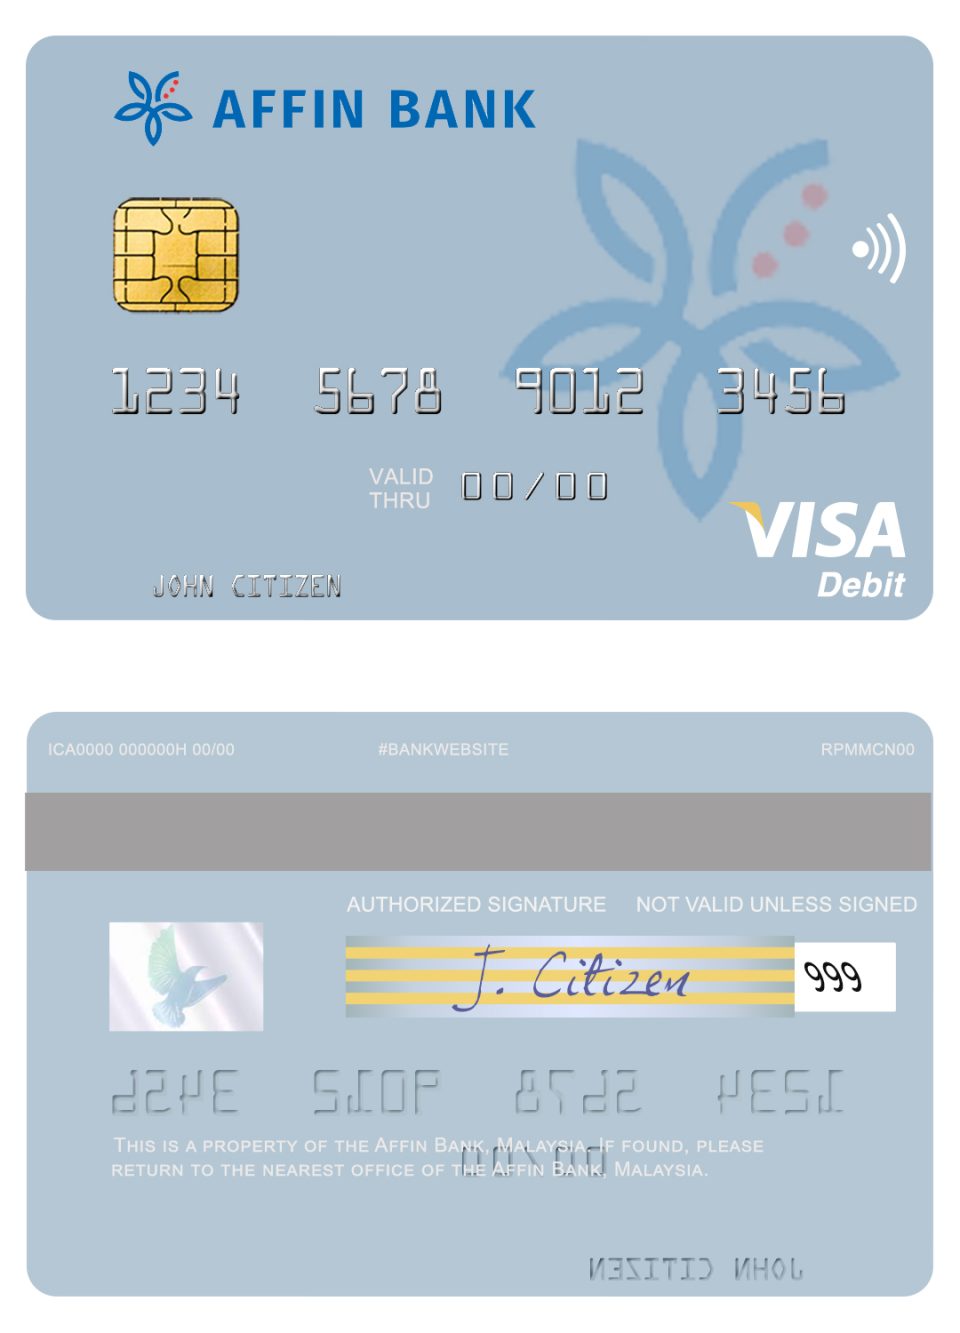 Fillable Malaysia Affin Bank visa card Templates | Layer-Based PSD